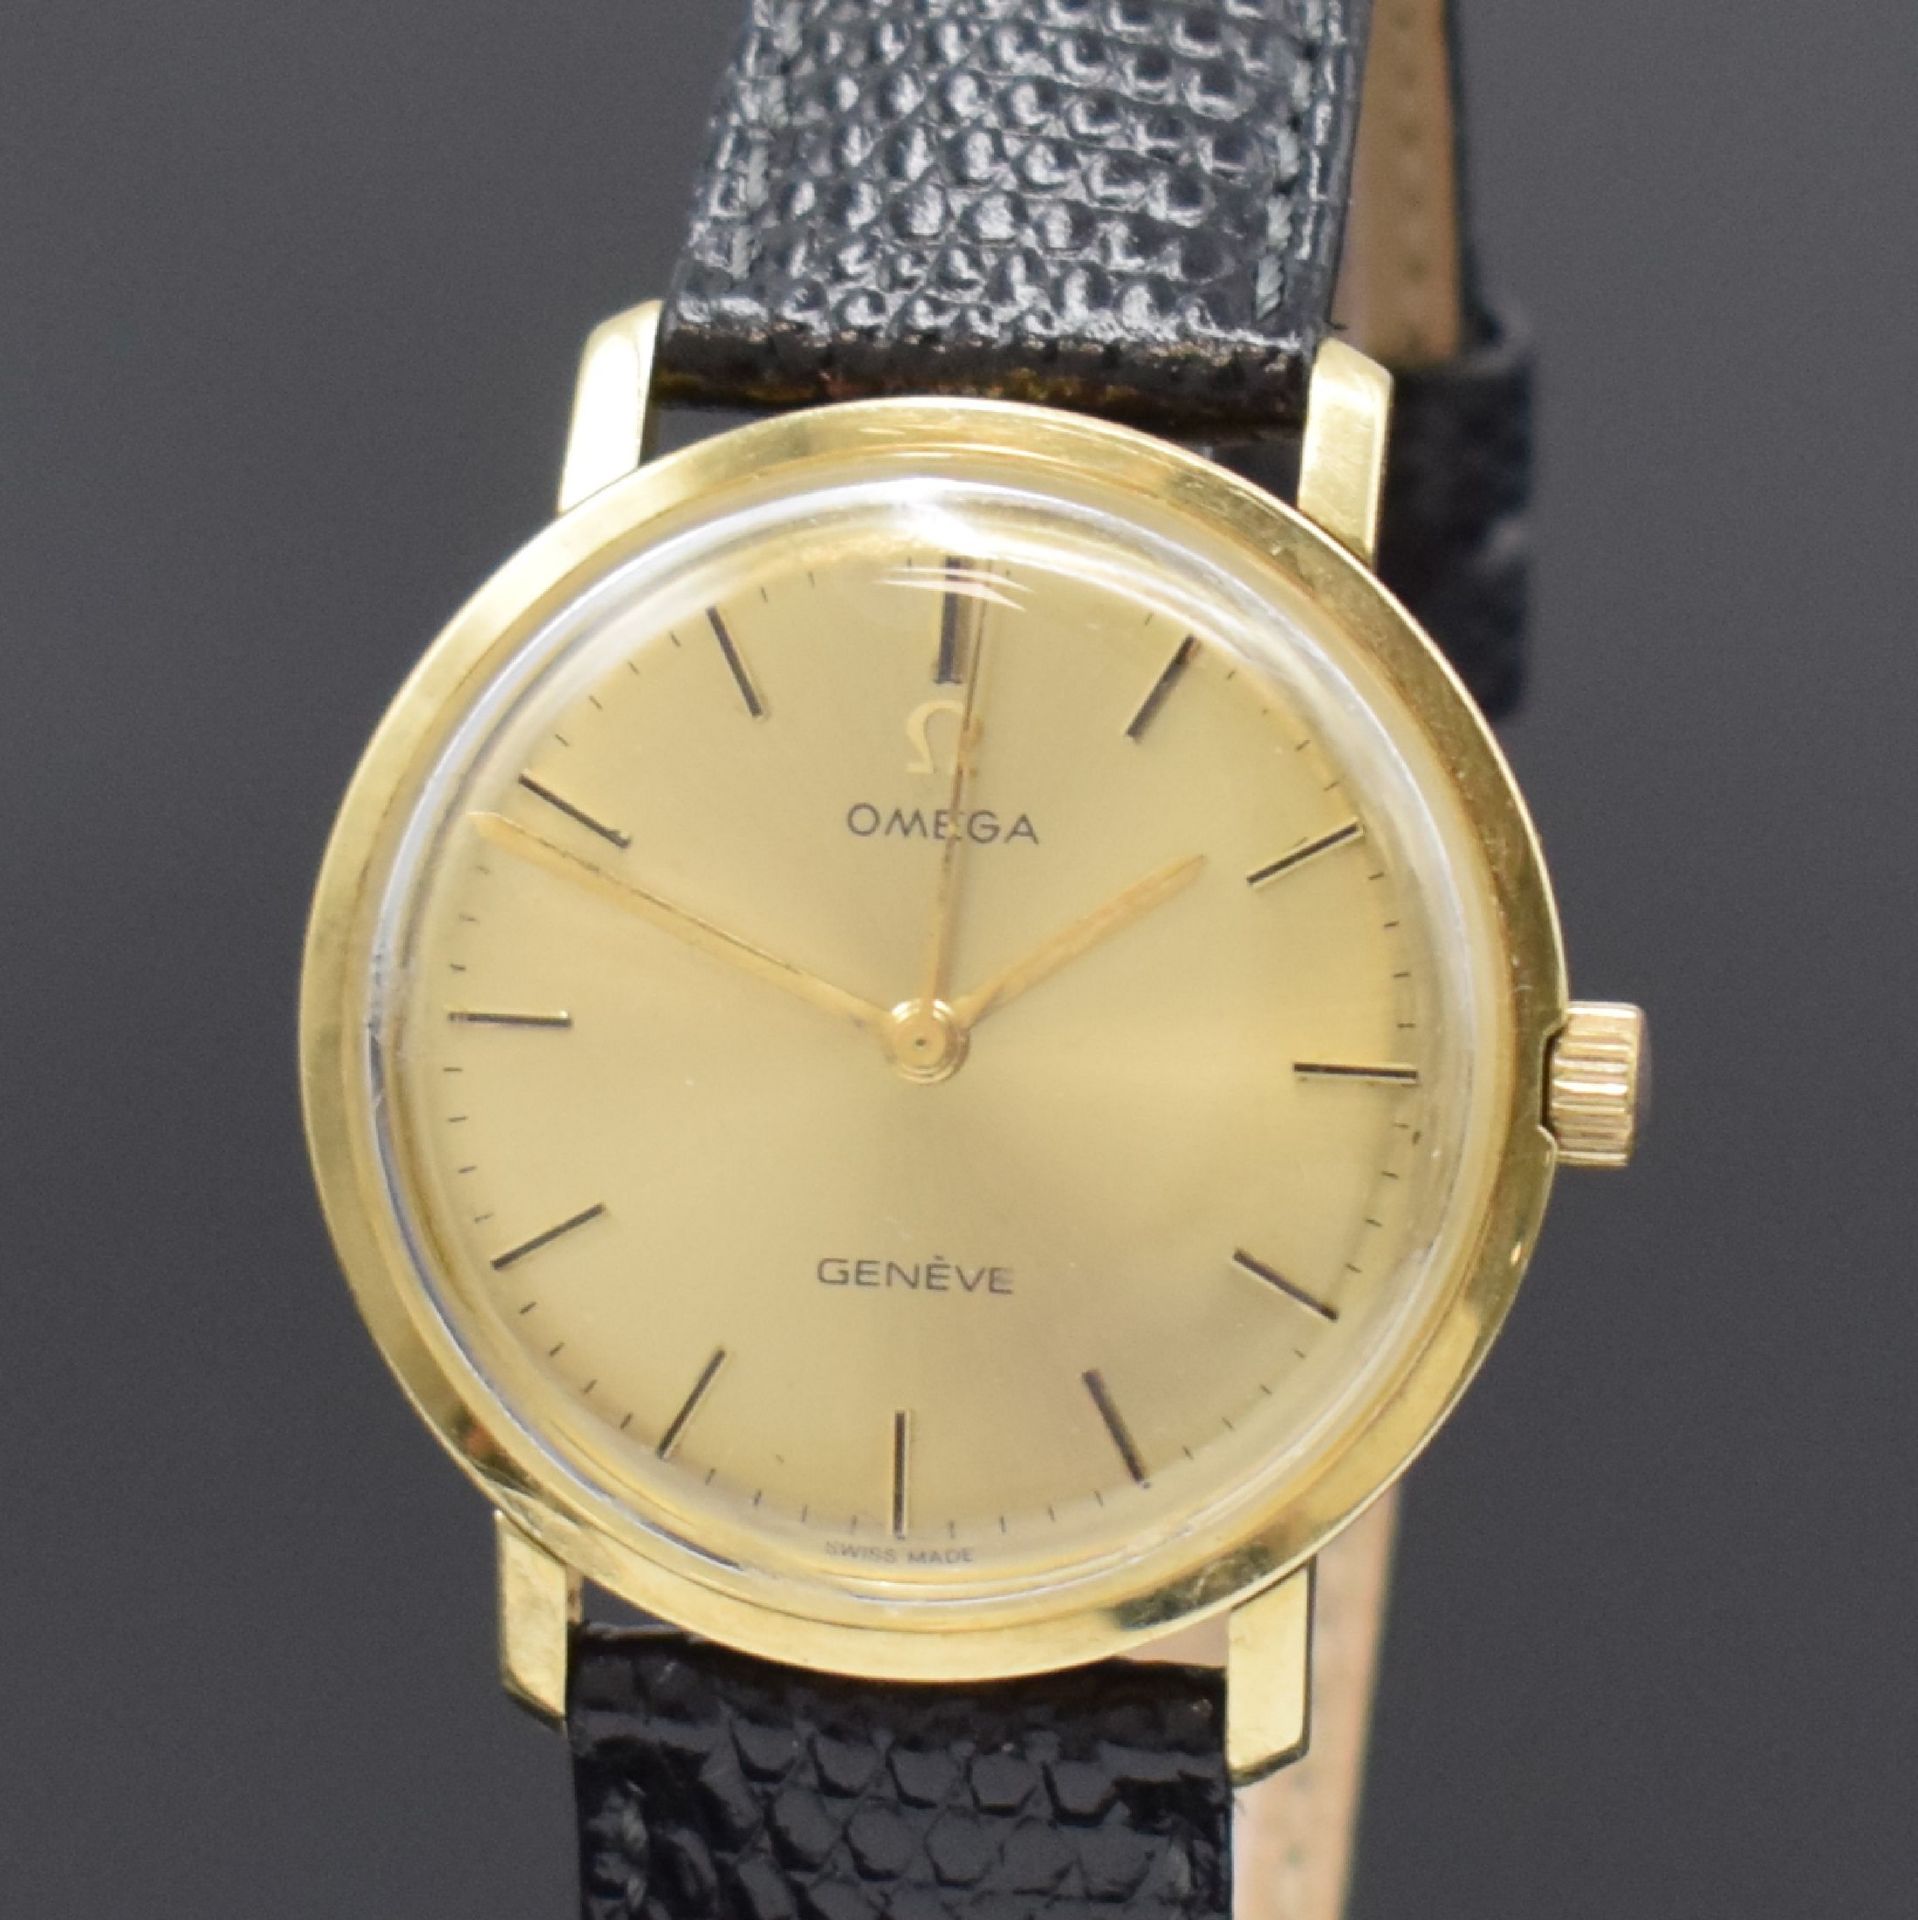 OMEGA Geneve Armbanduhr in GG 585/000,  Schweiz um 1970, - Bild 2 aus 6